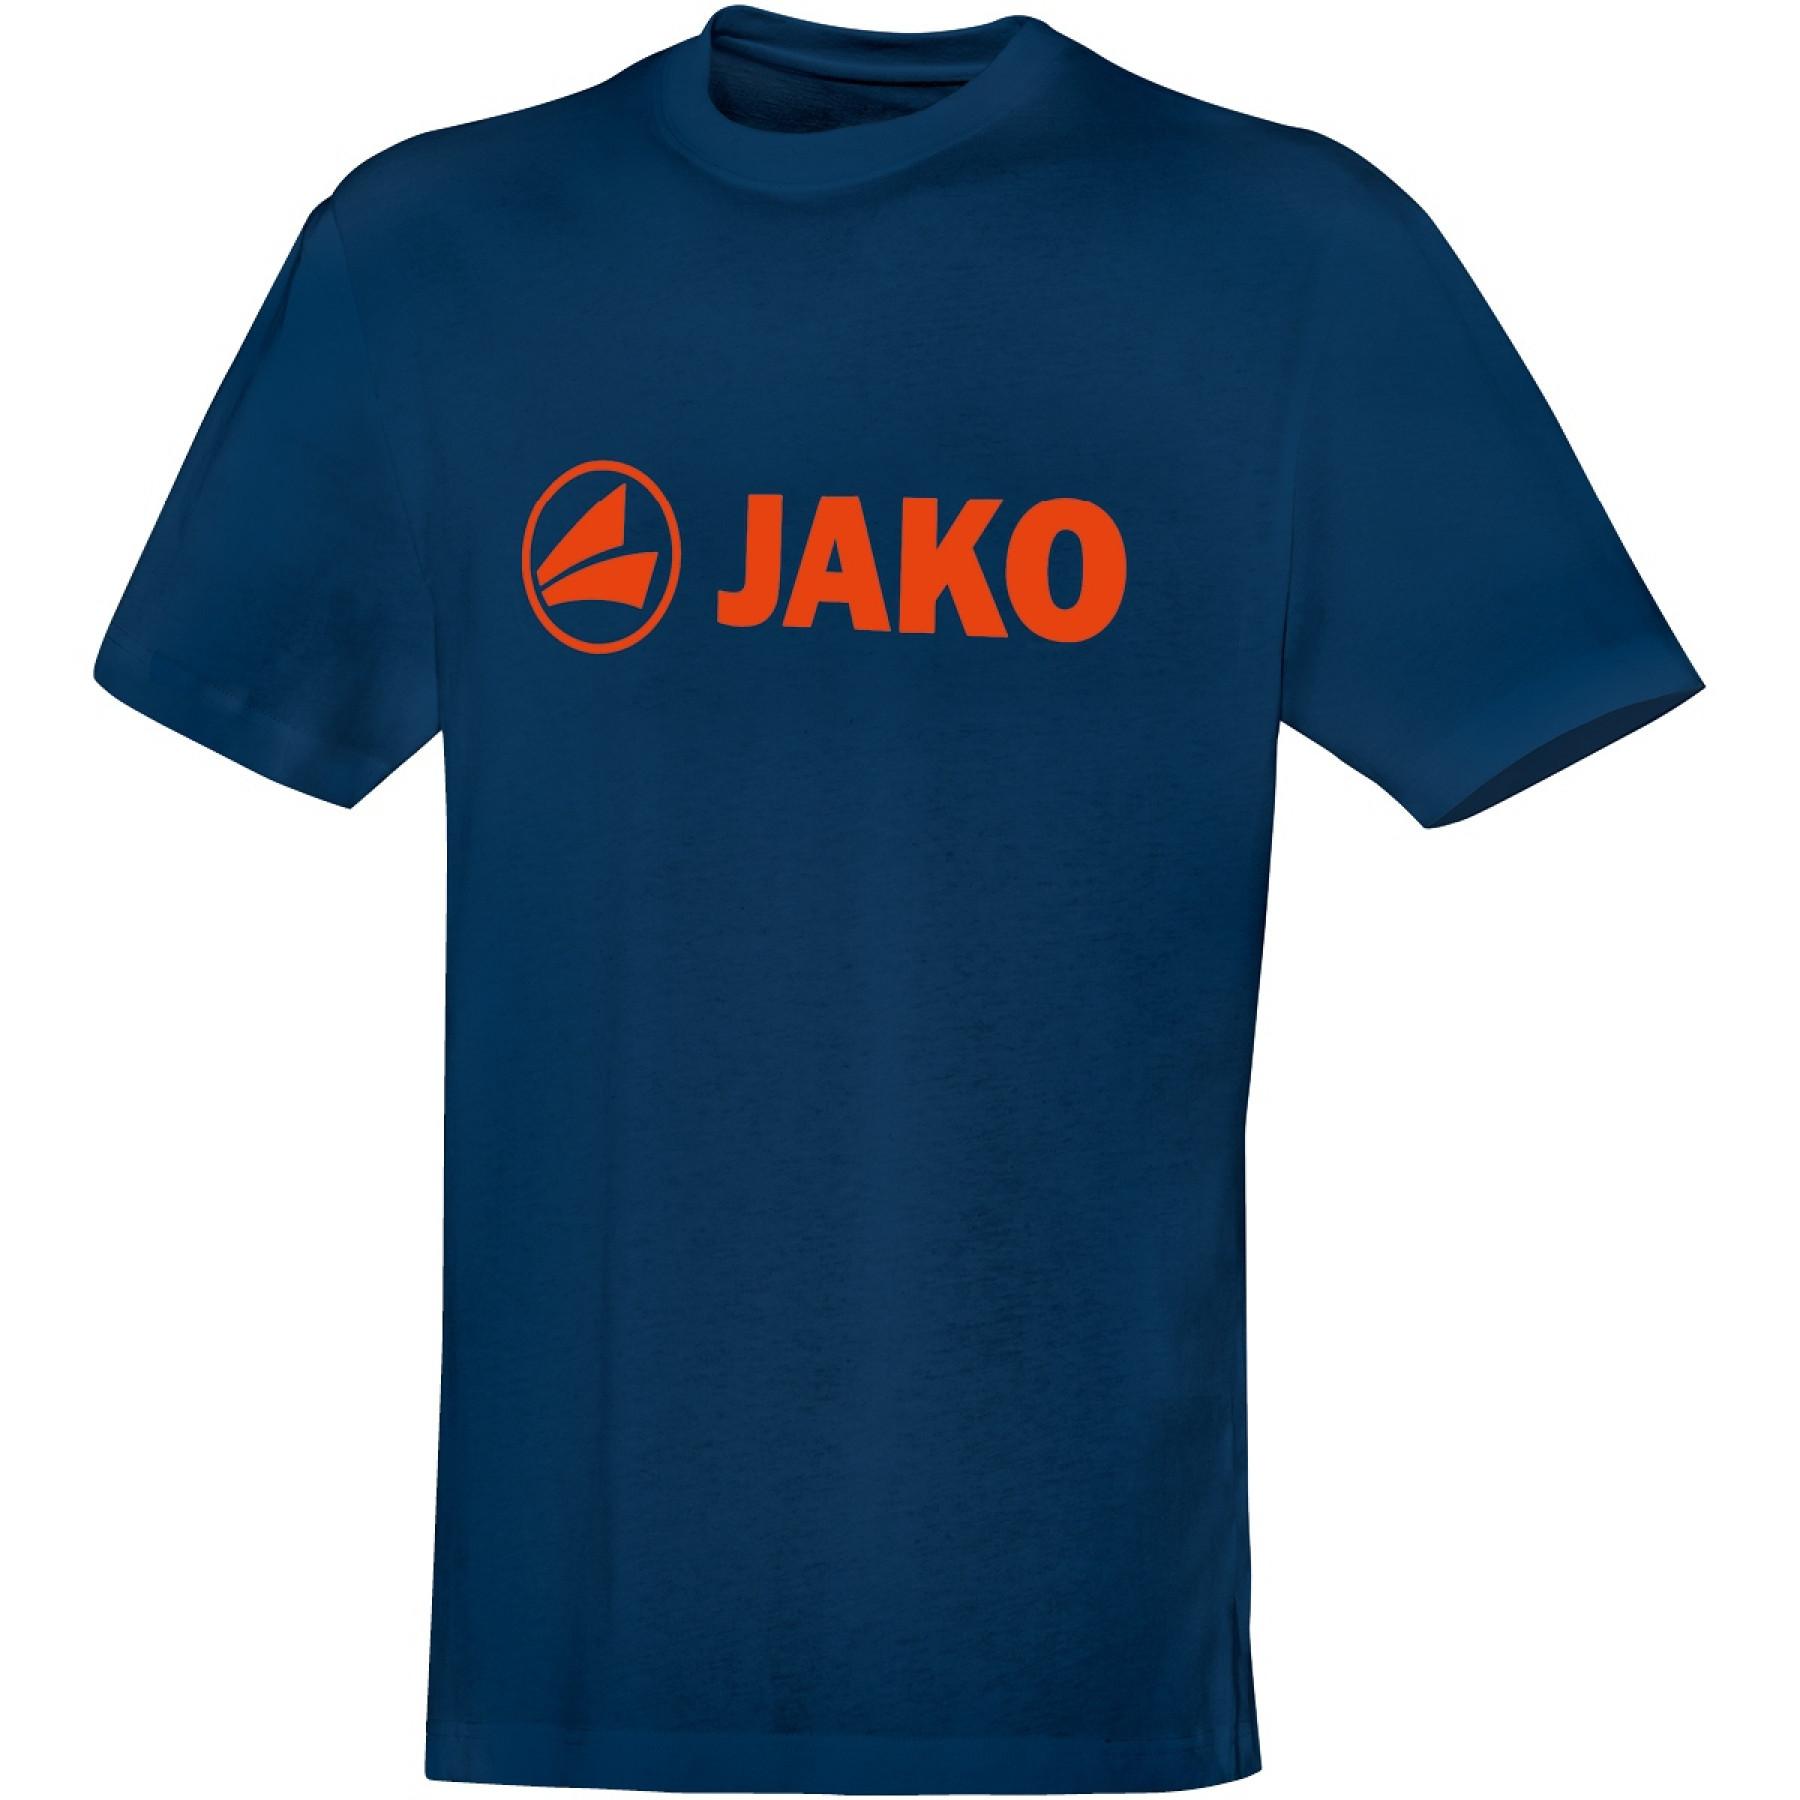 Junior-T-Shirt Jako Promo